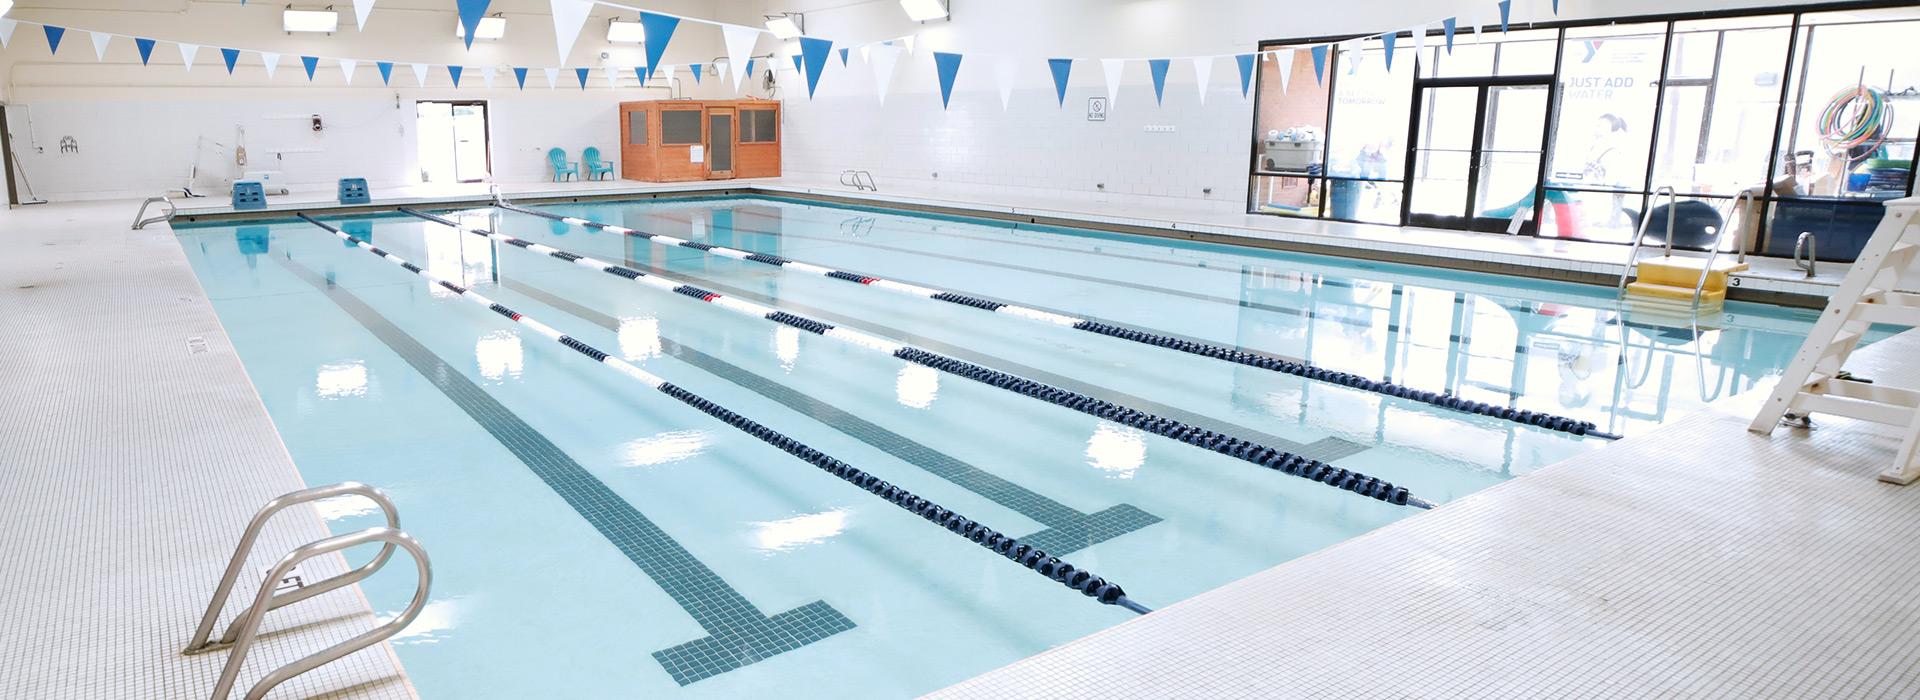 25-meter indoor lap swimming pool at the Mt. Trashmore Family YMCA